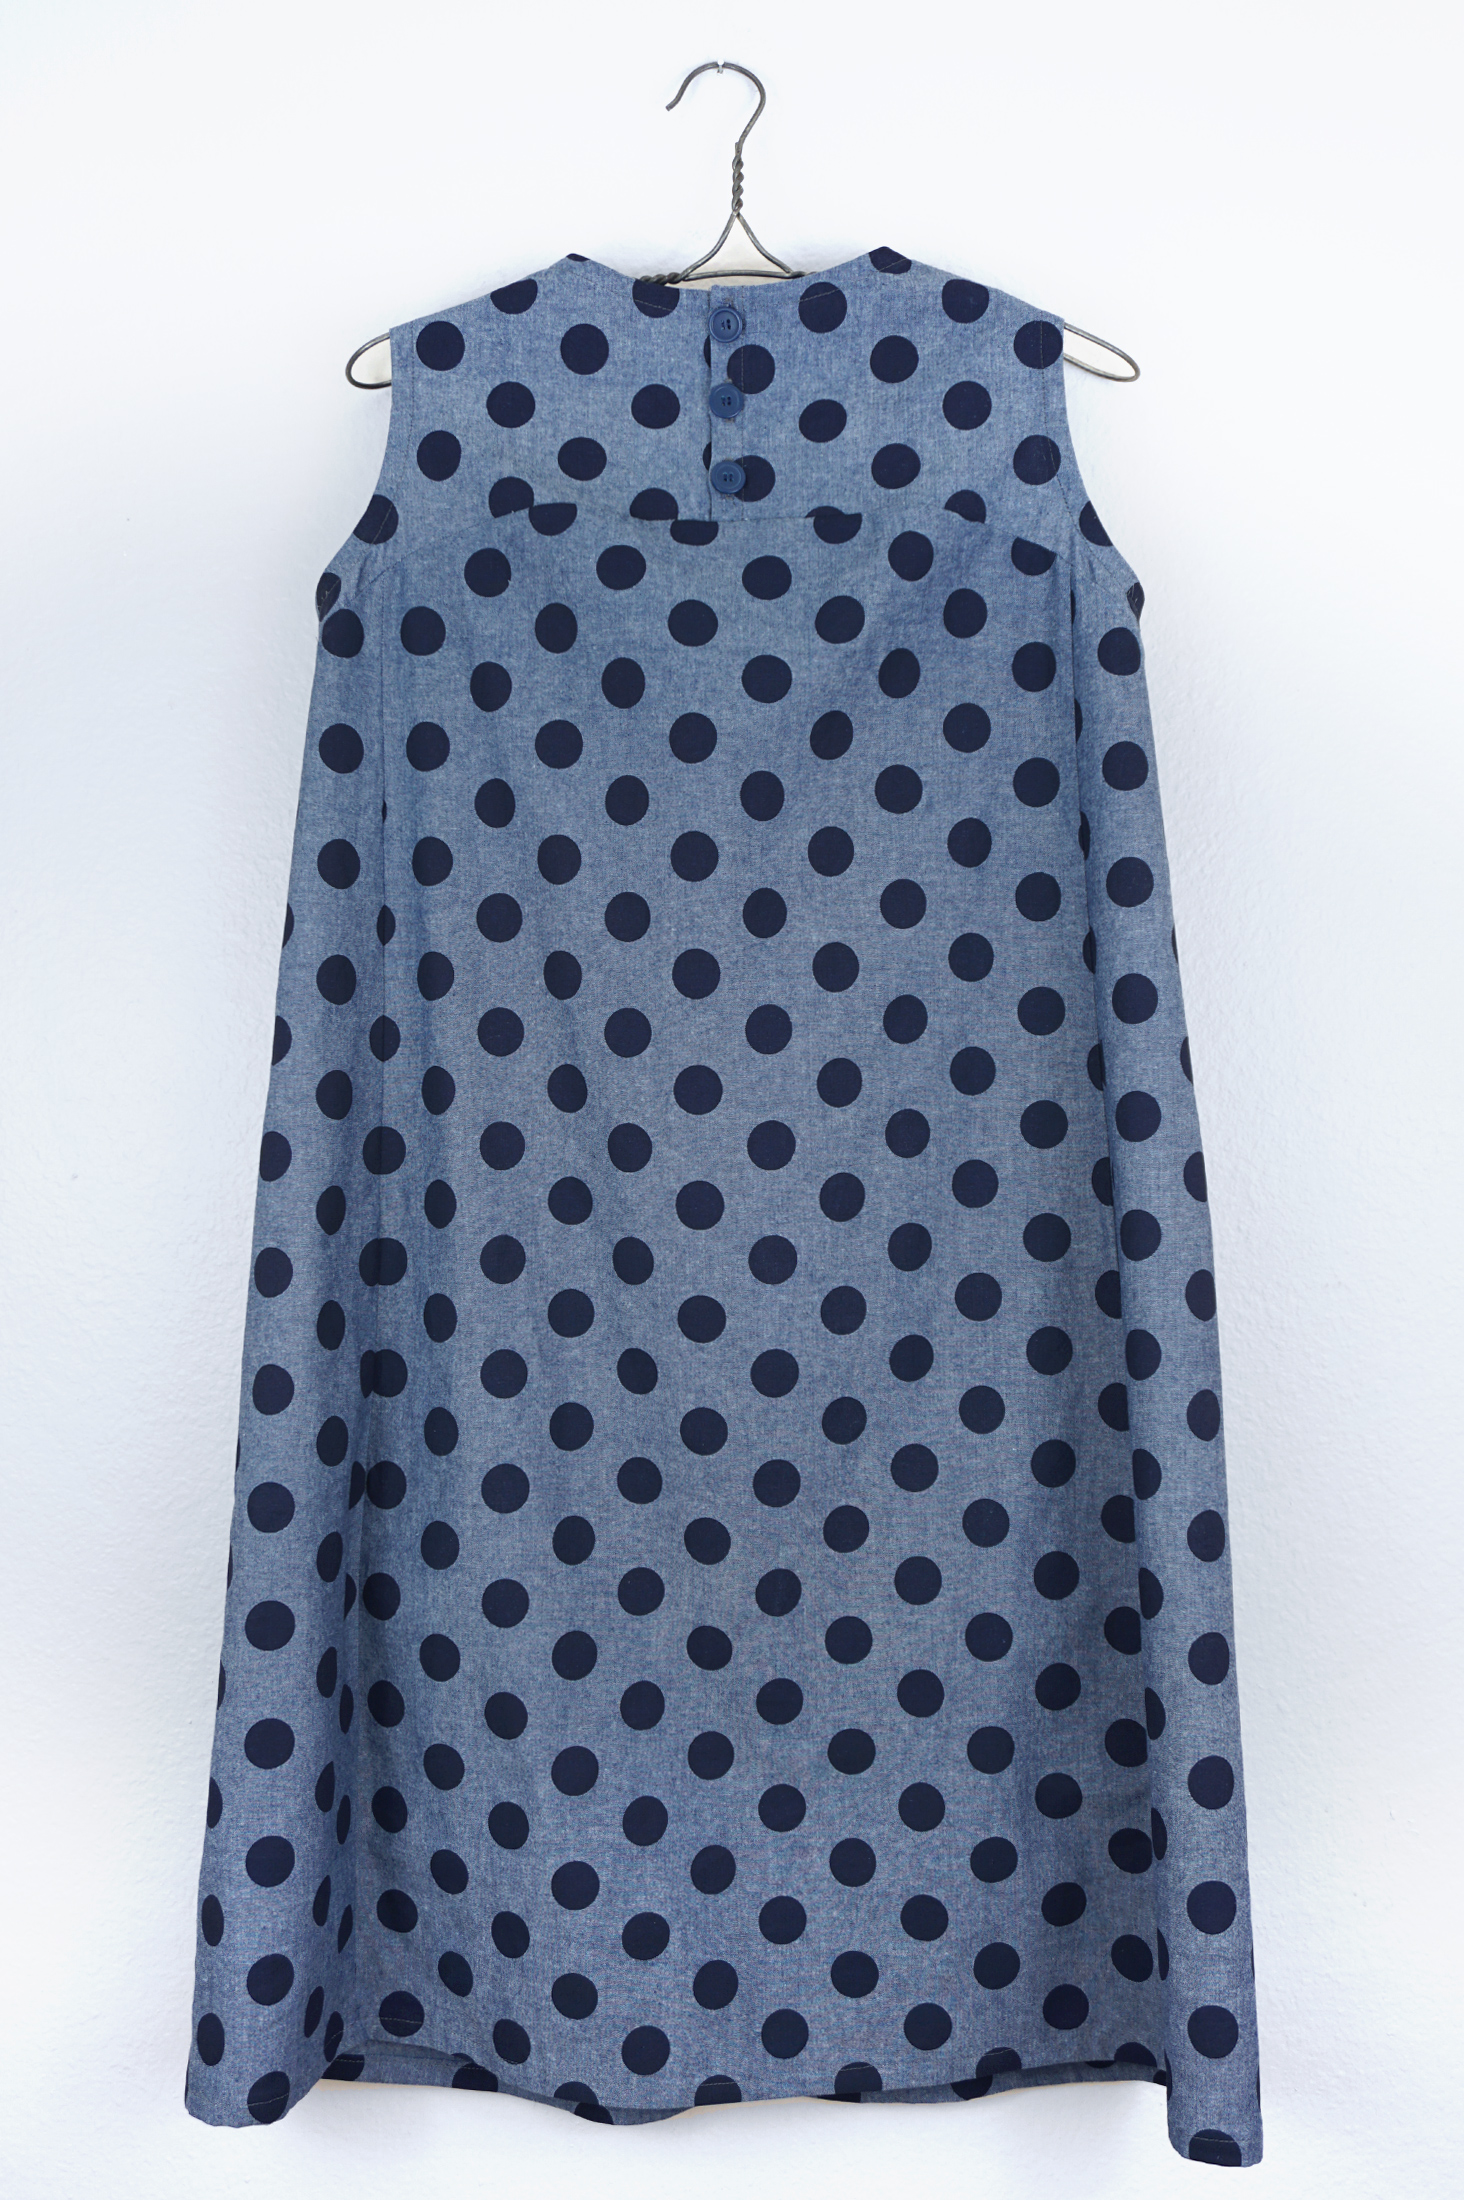 DIY Polka Dot Rushcutter Dress — Sew DIY